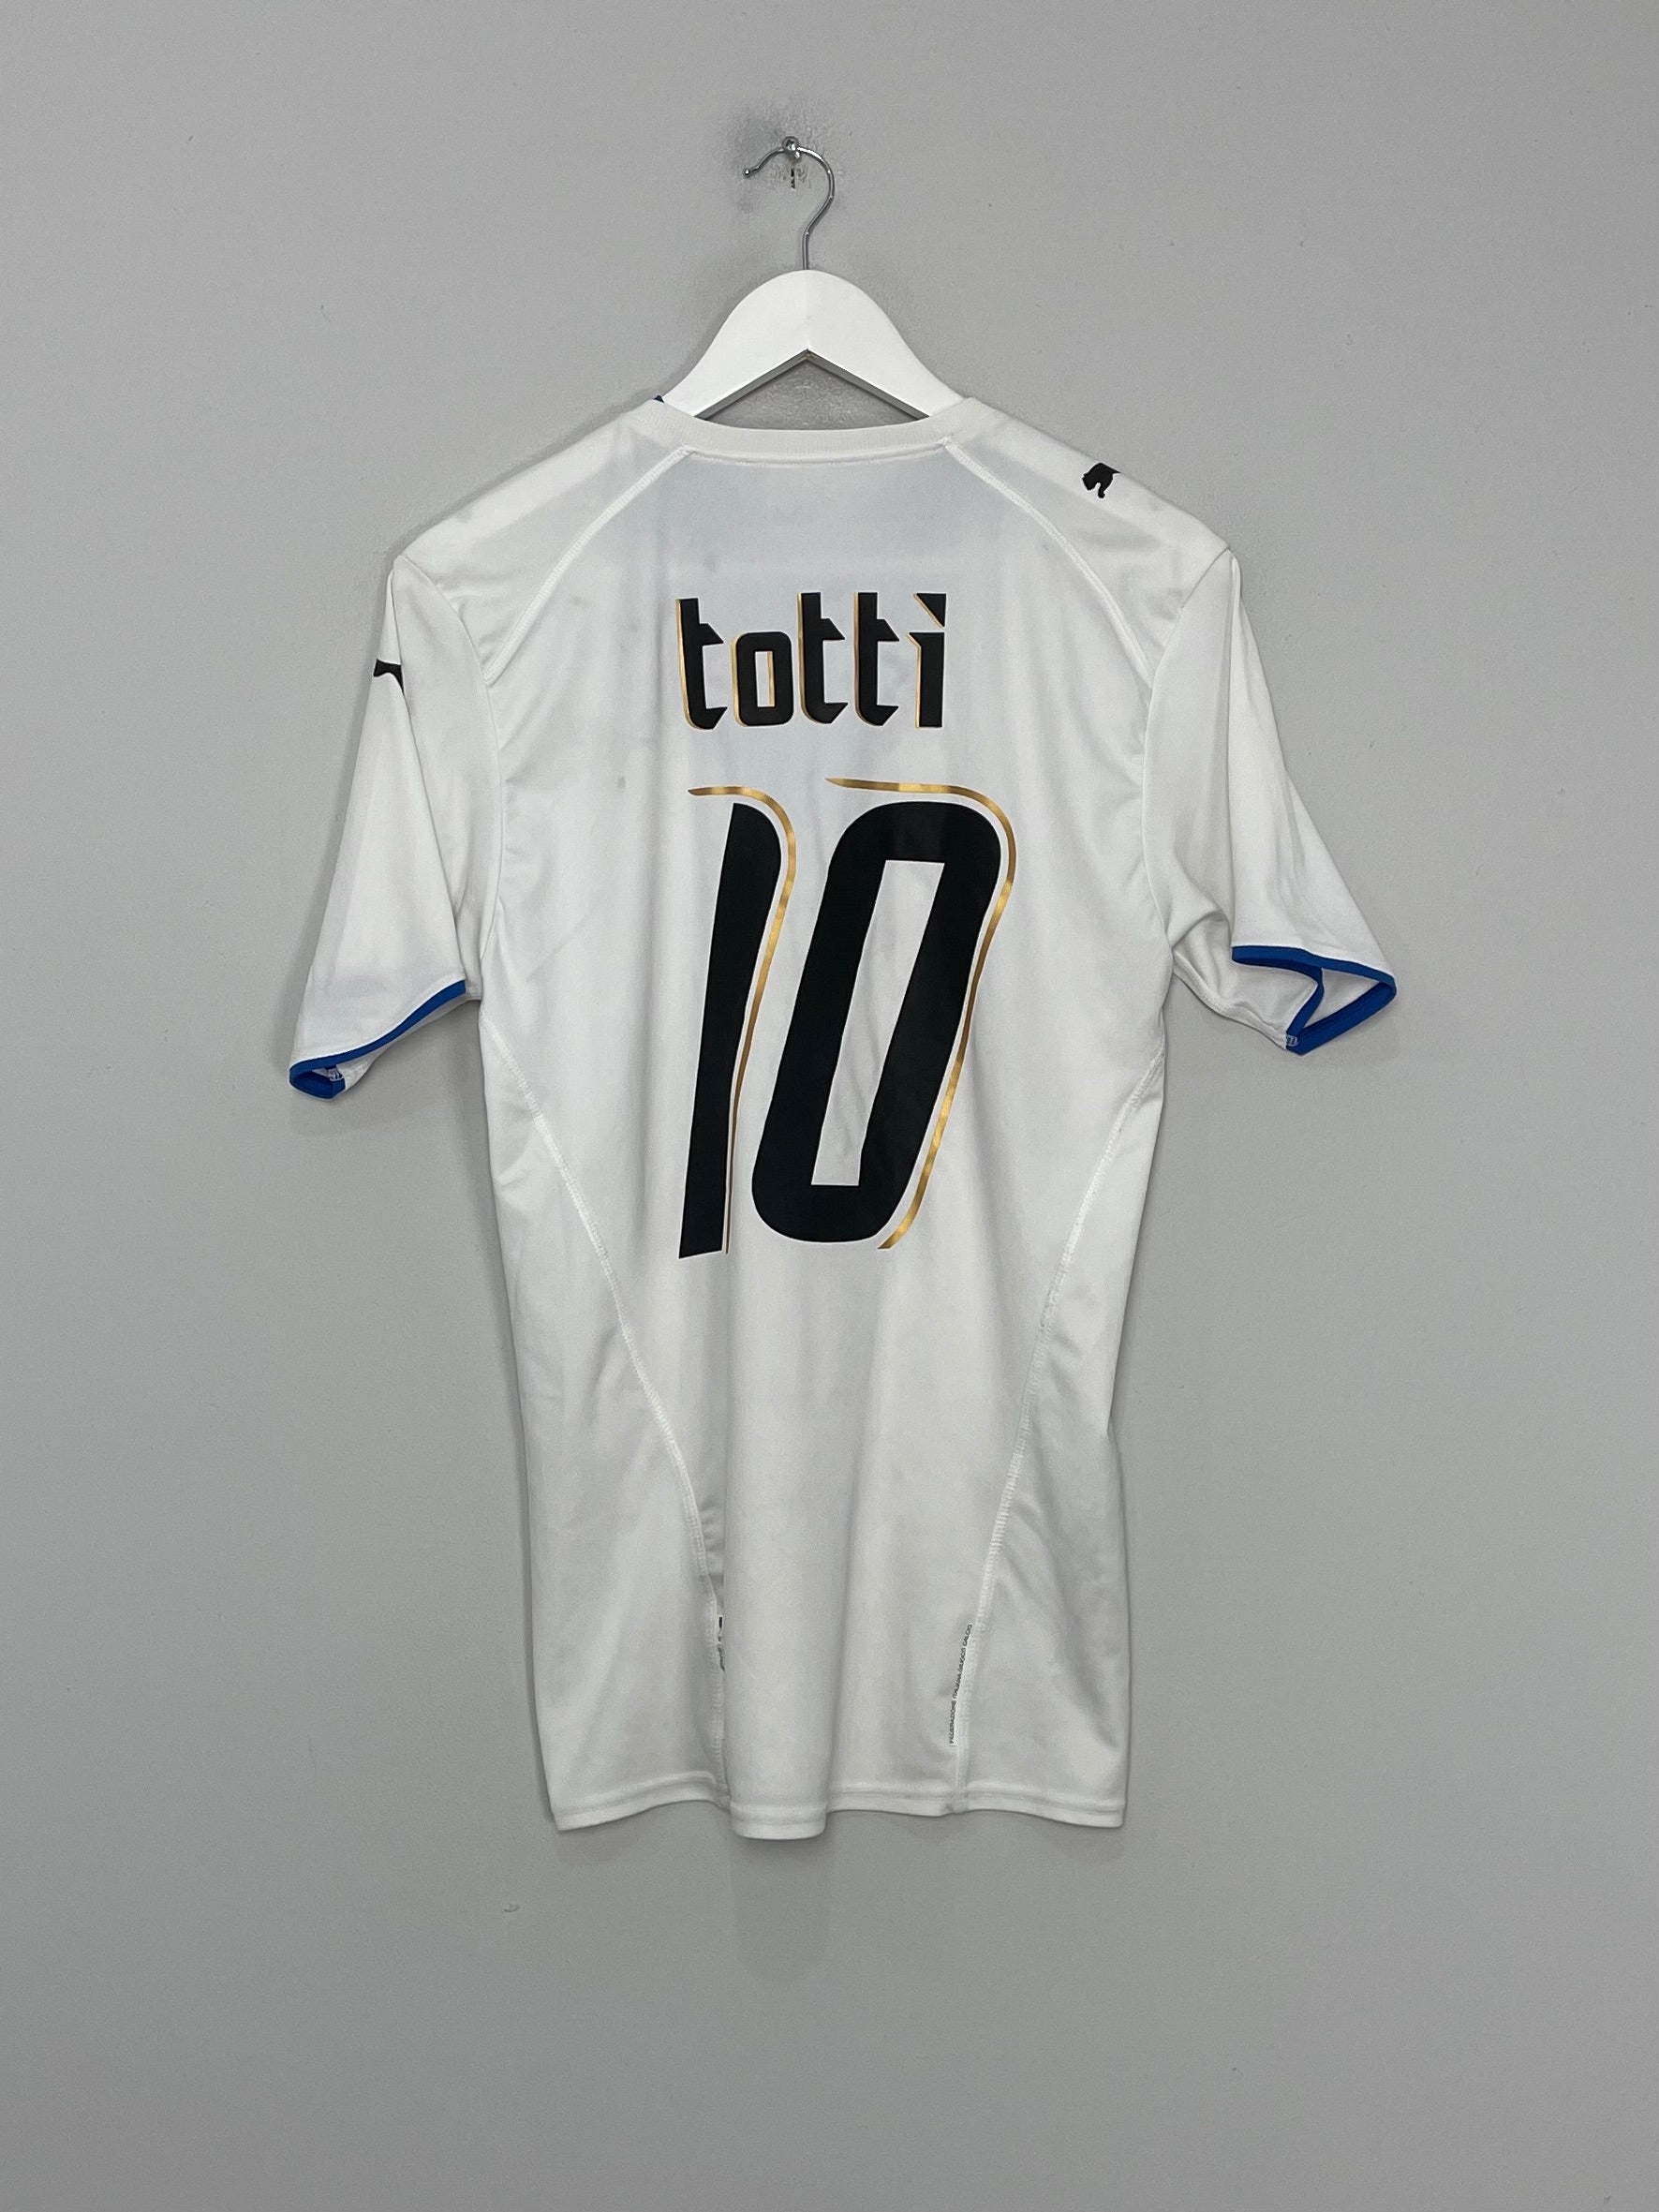 Francesco Totti Italy World Cup jersey